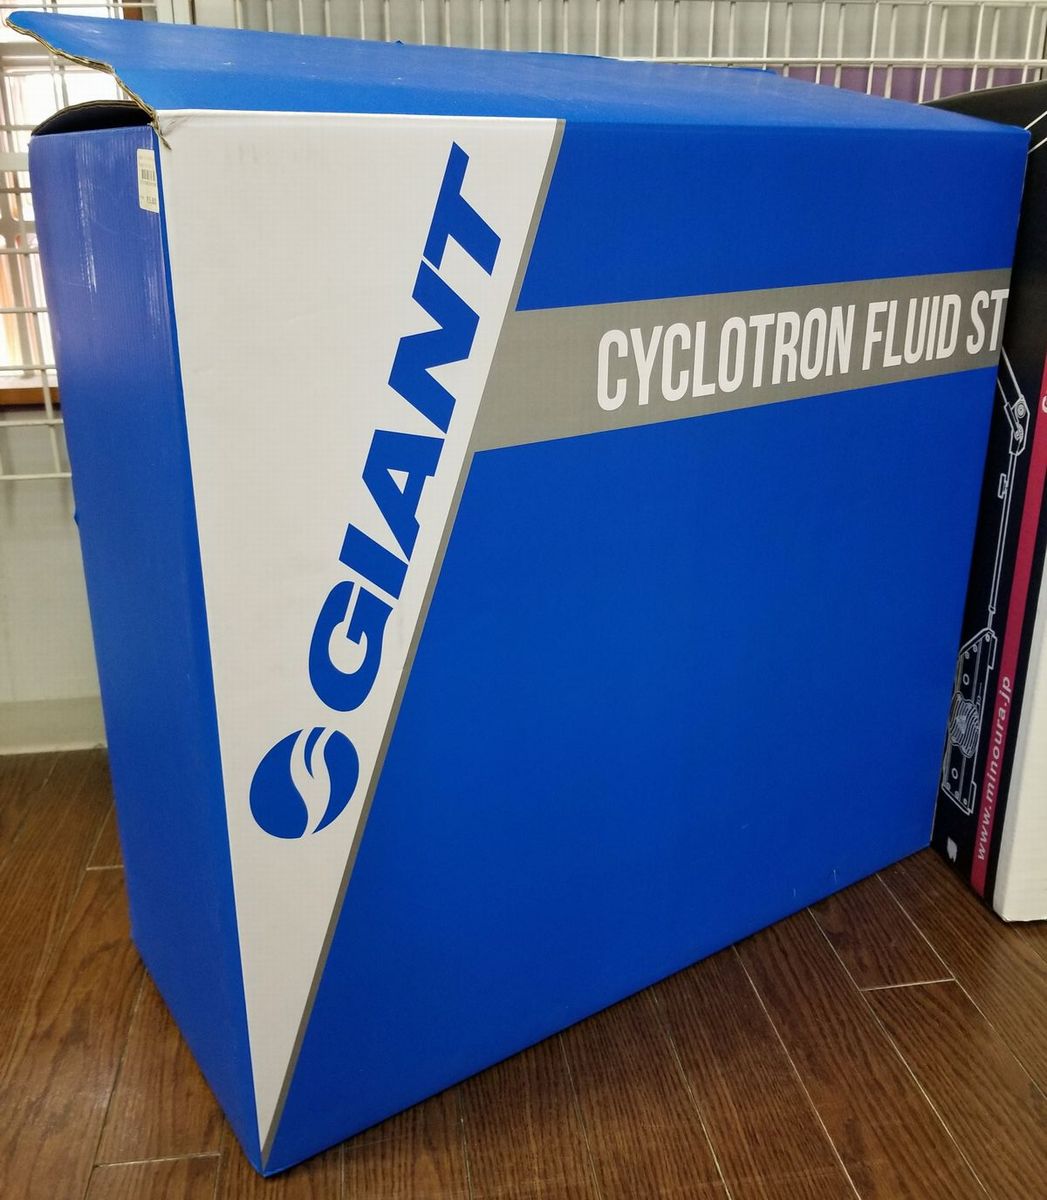 GIANT cyclotron fluid st ローラー台